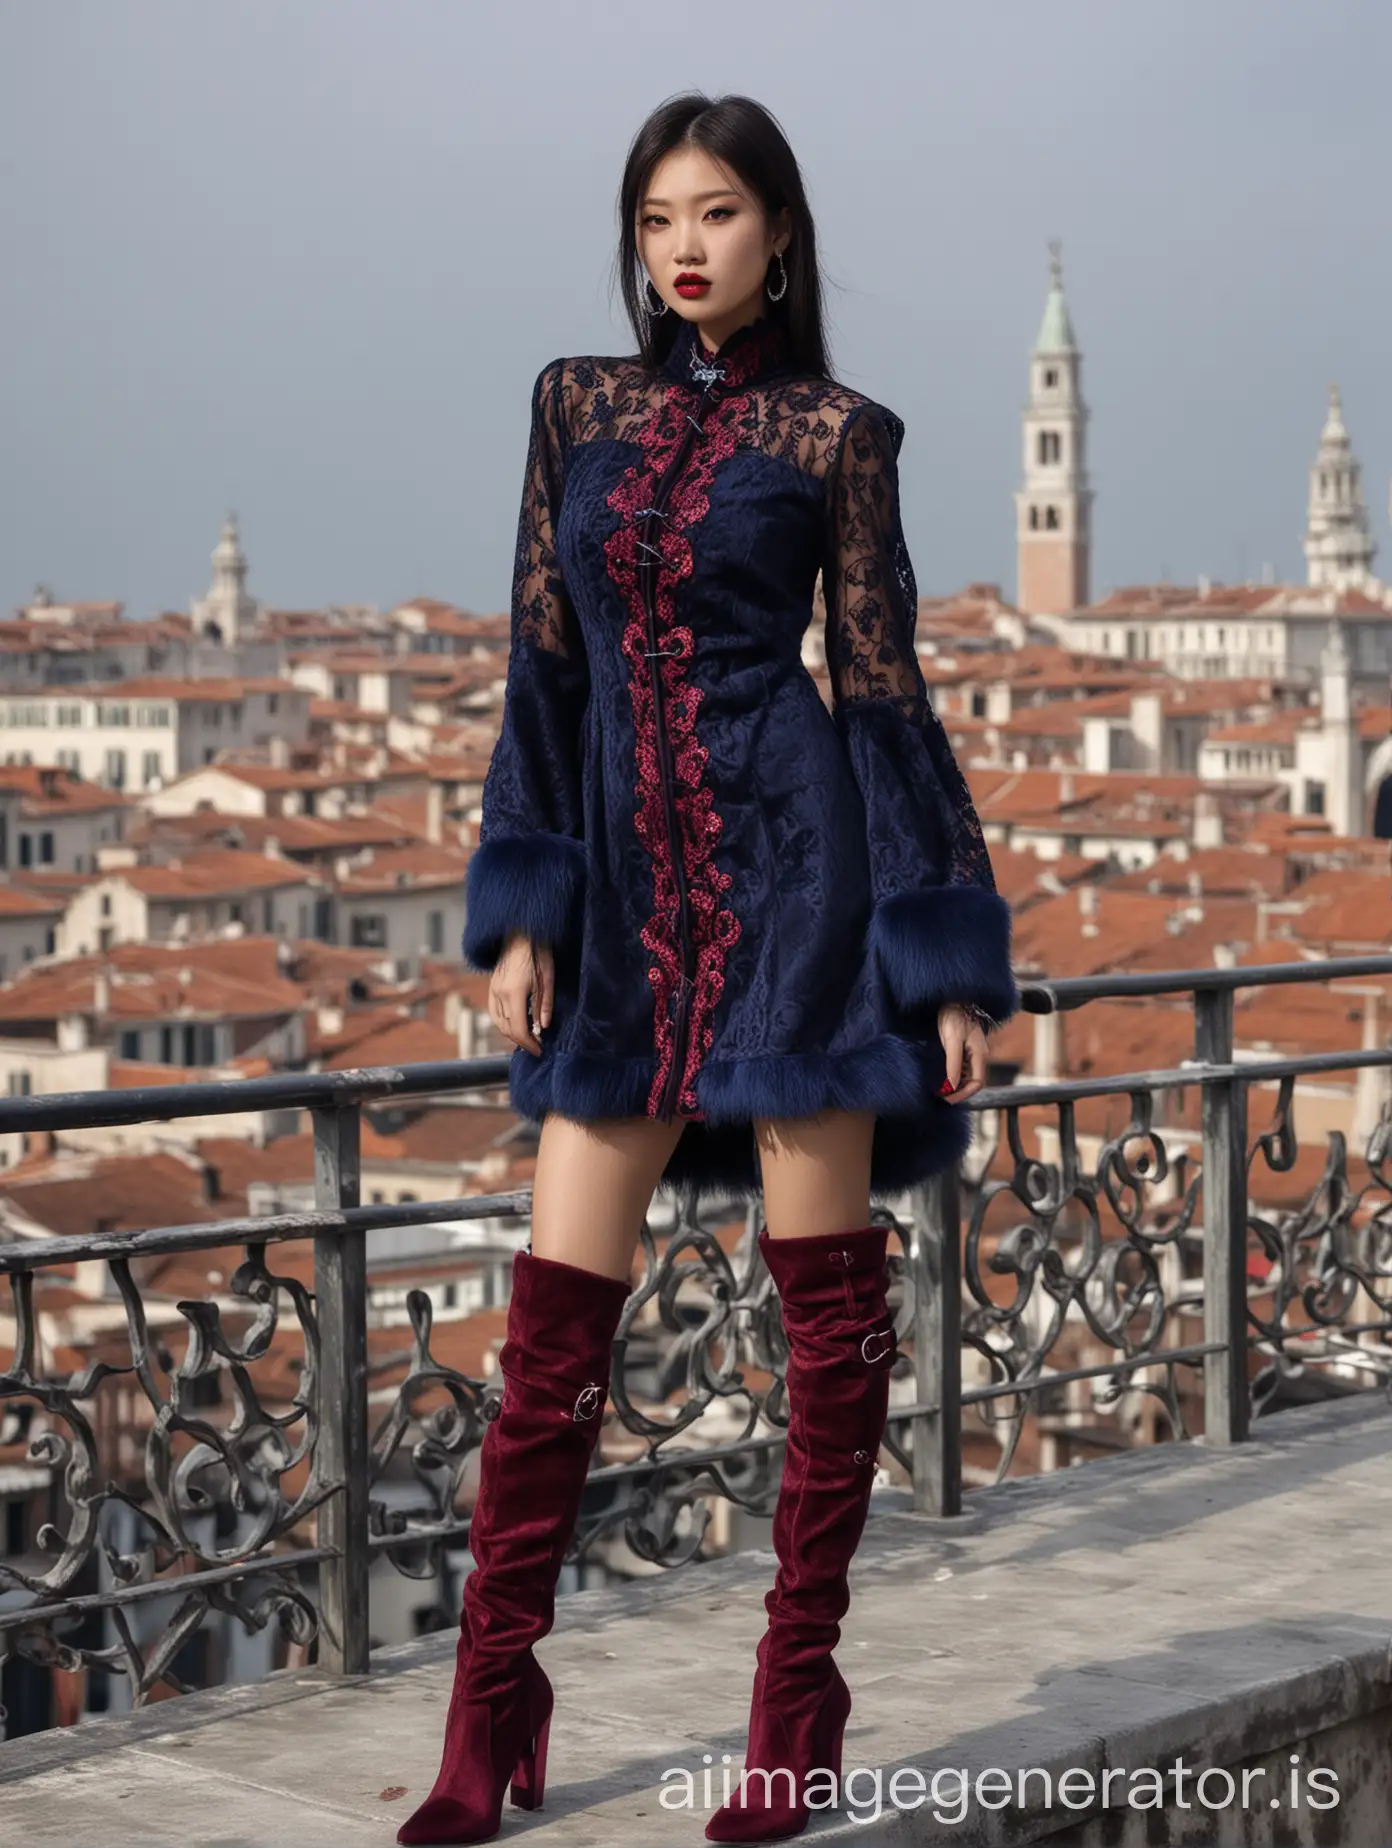 Elegant-Chinese-Model-Strutting-in-High-Fashion-Ensemble-on-Venezia-Rooftop